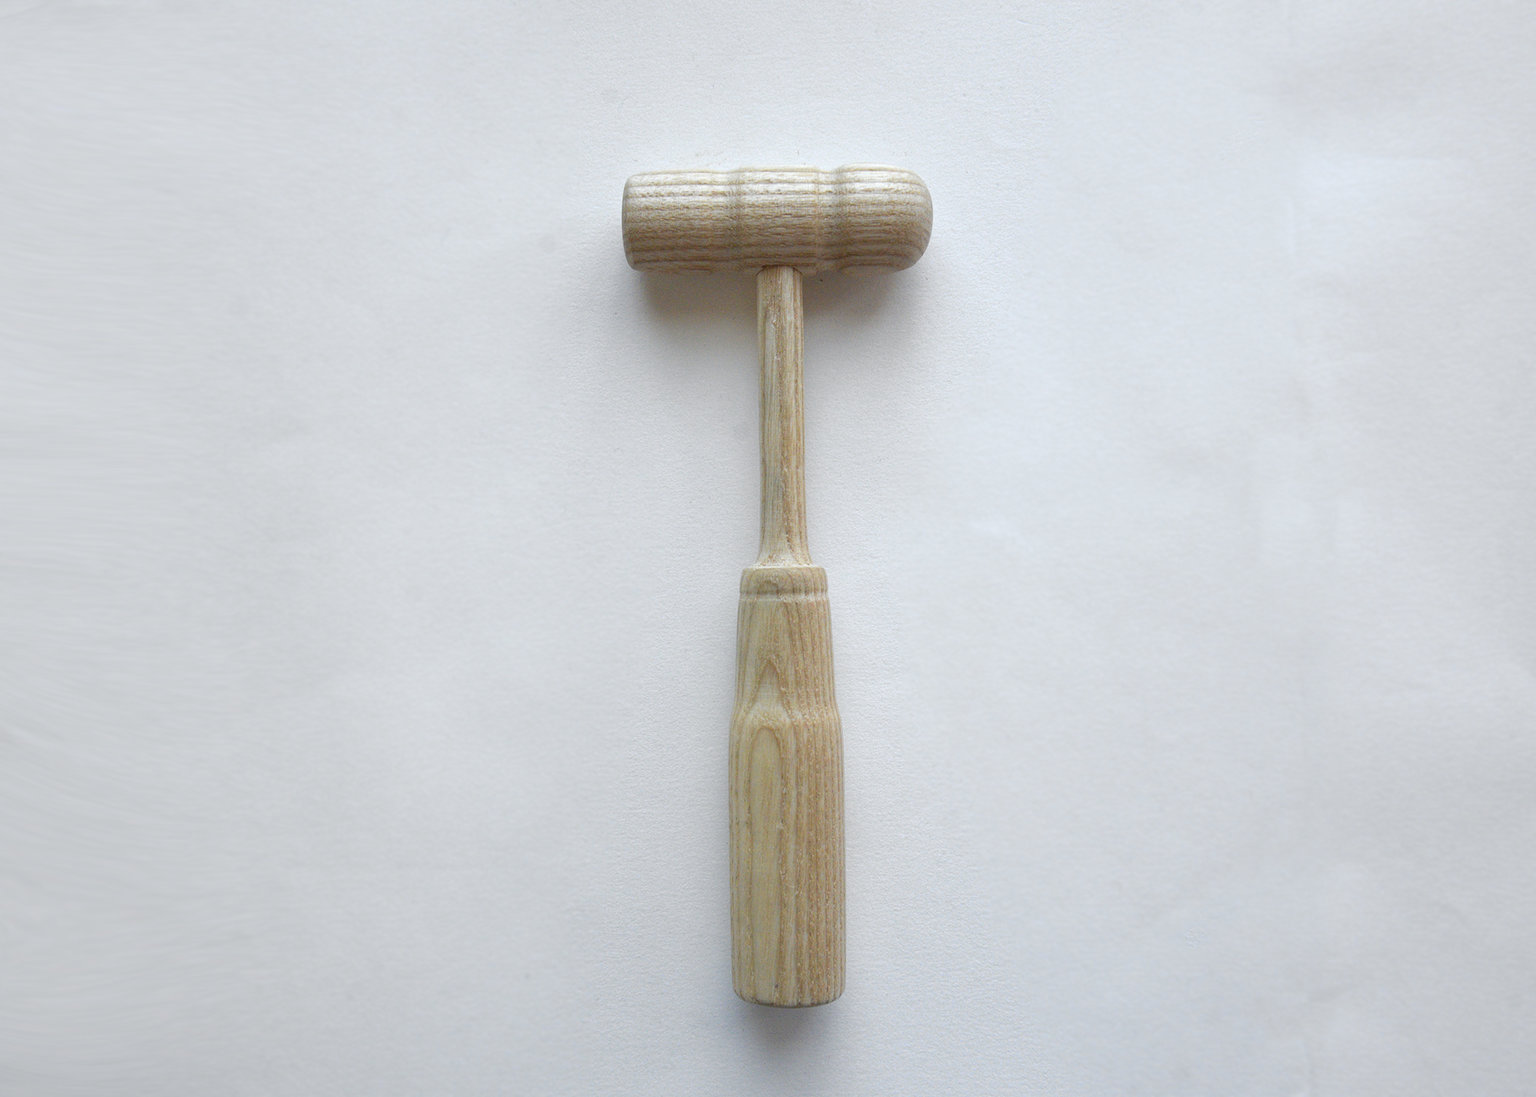 Handmade wooden hammer